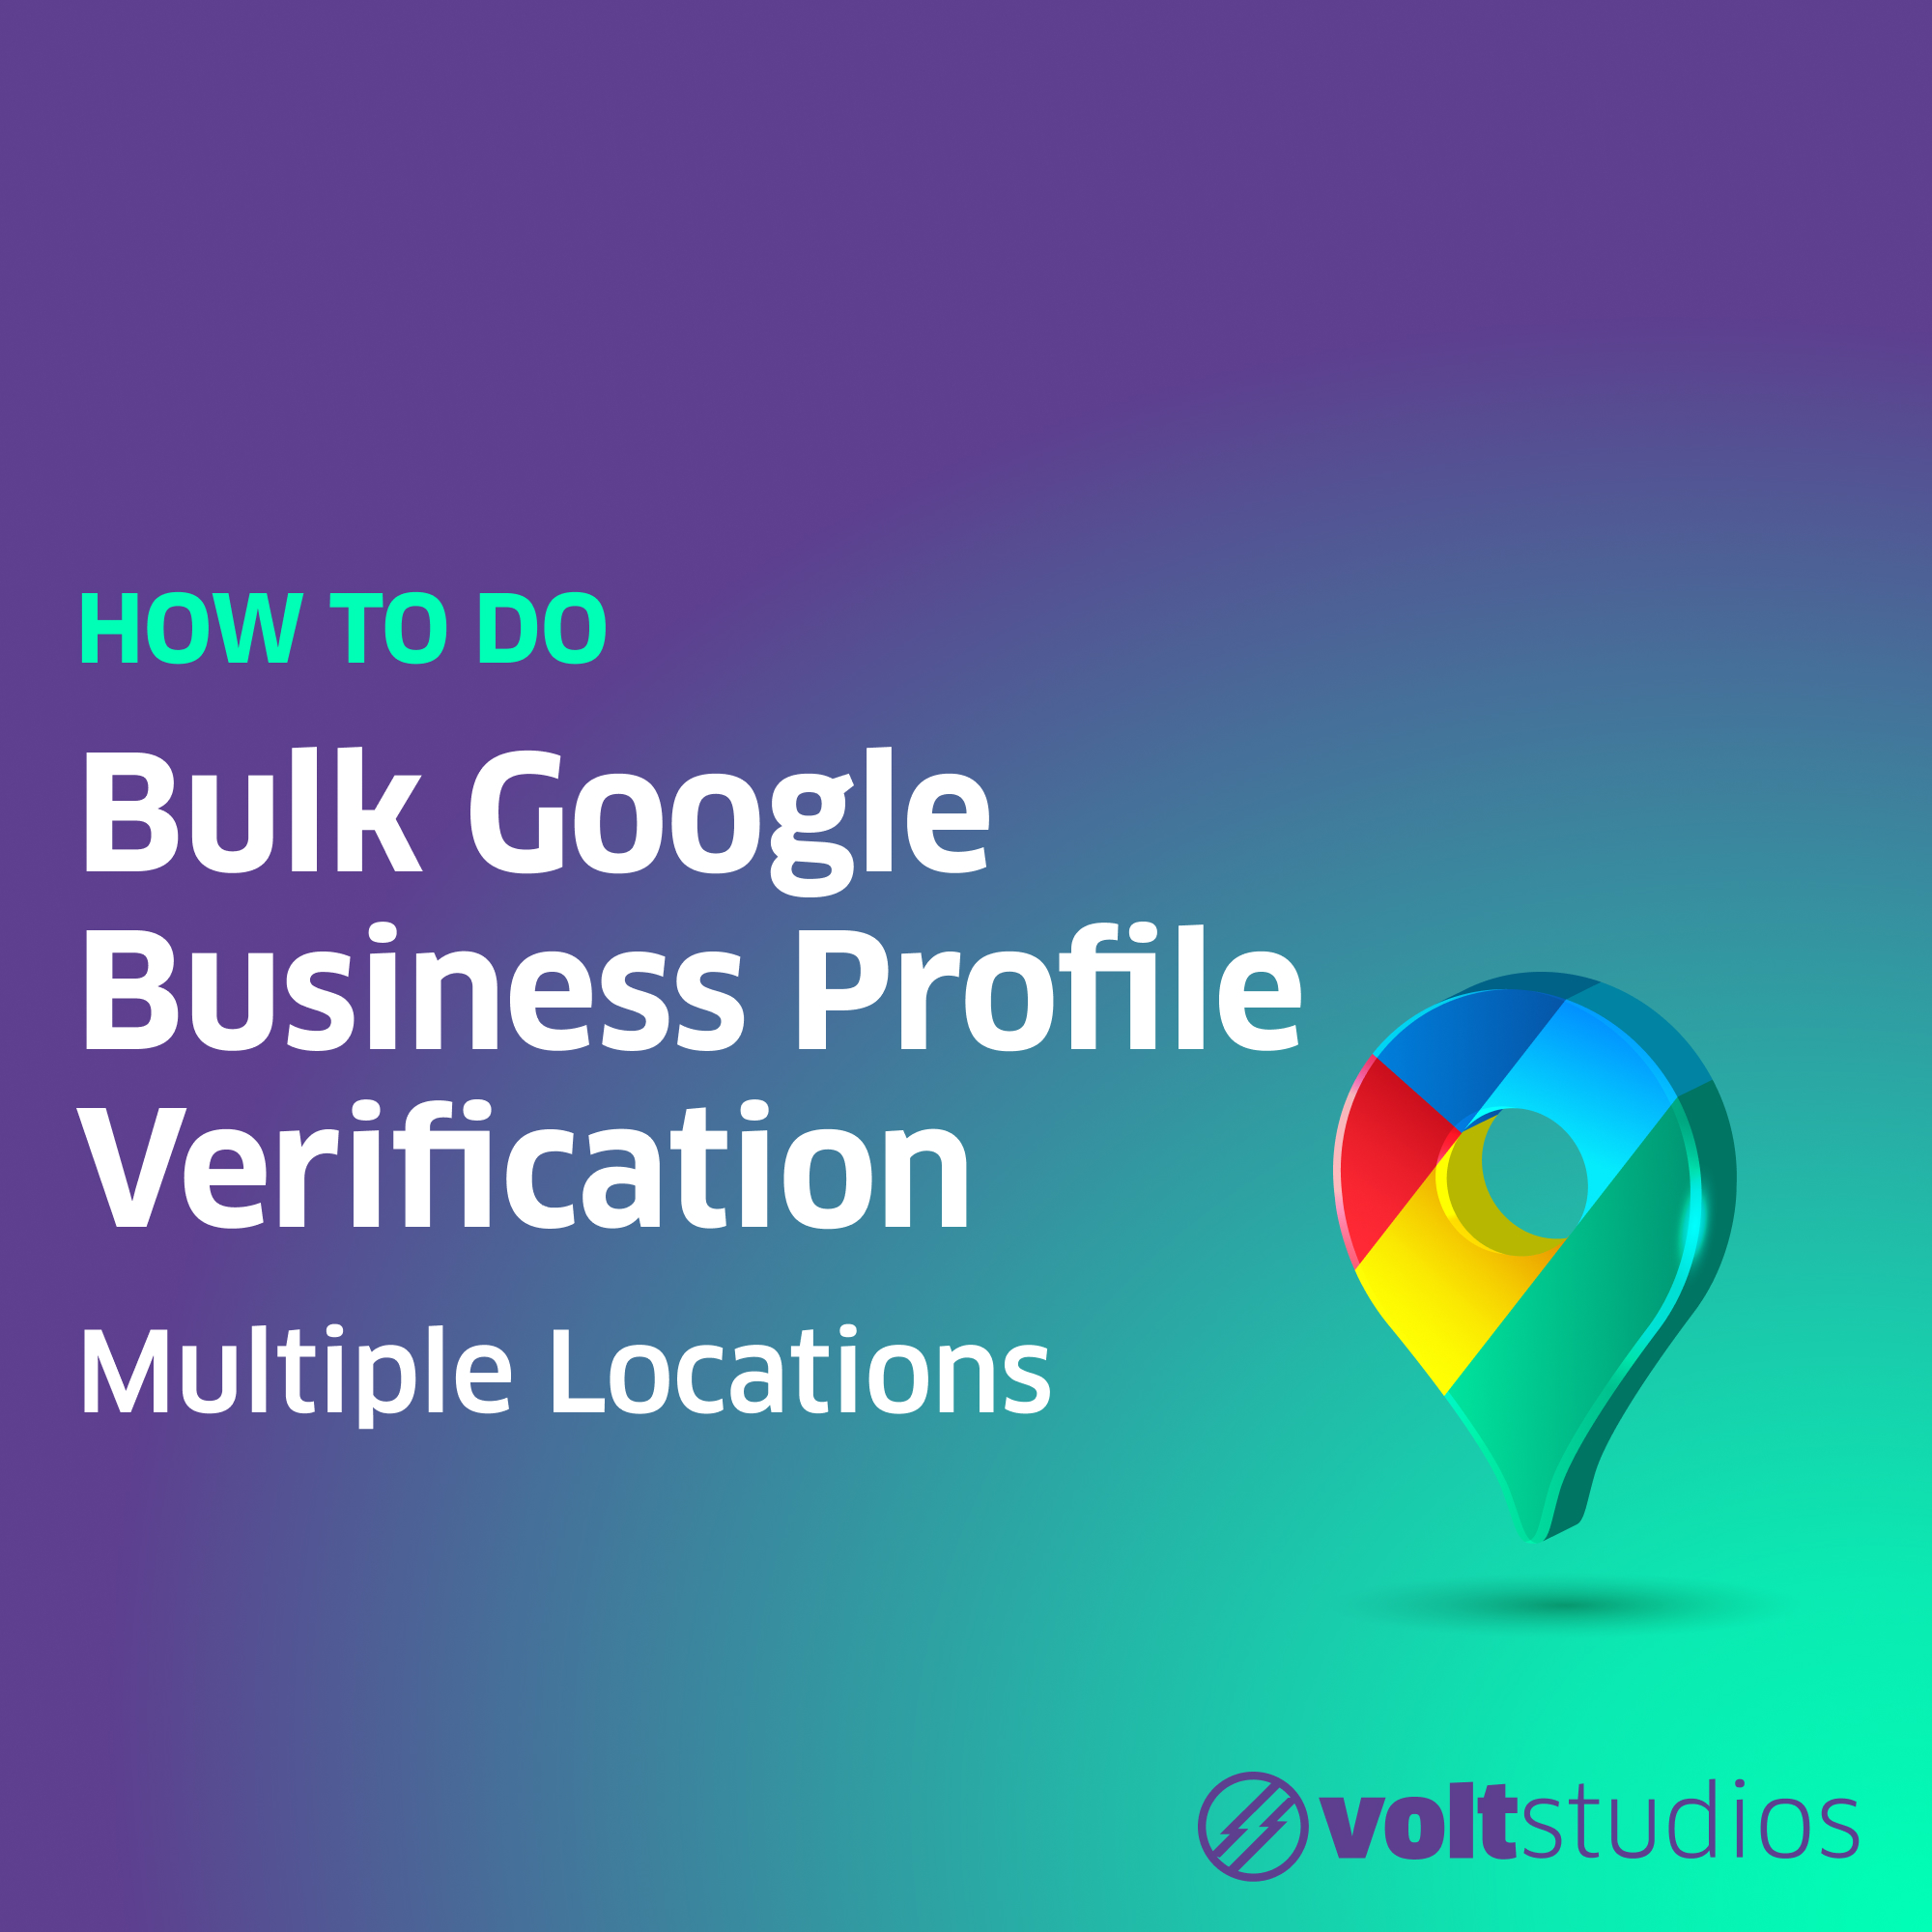 How To Do Bulk Google Business Profile Verification (Multiple Locations)?